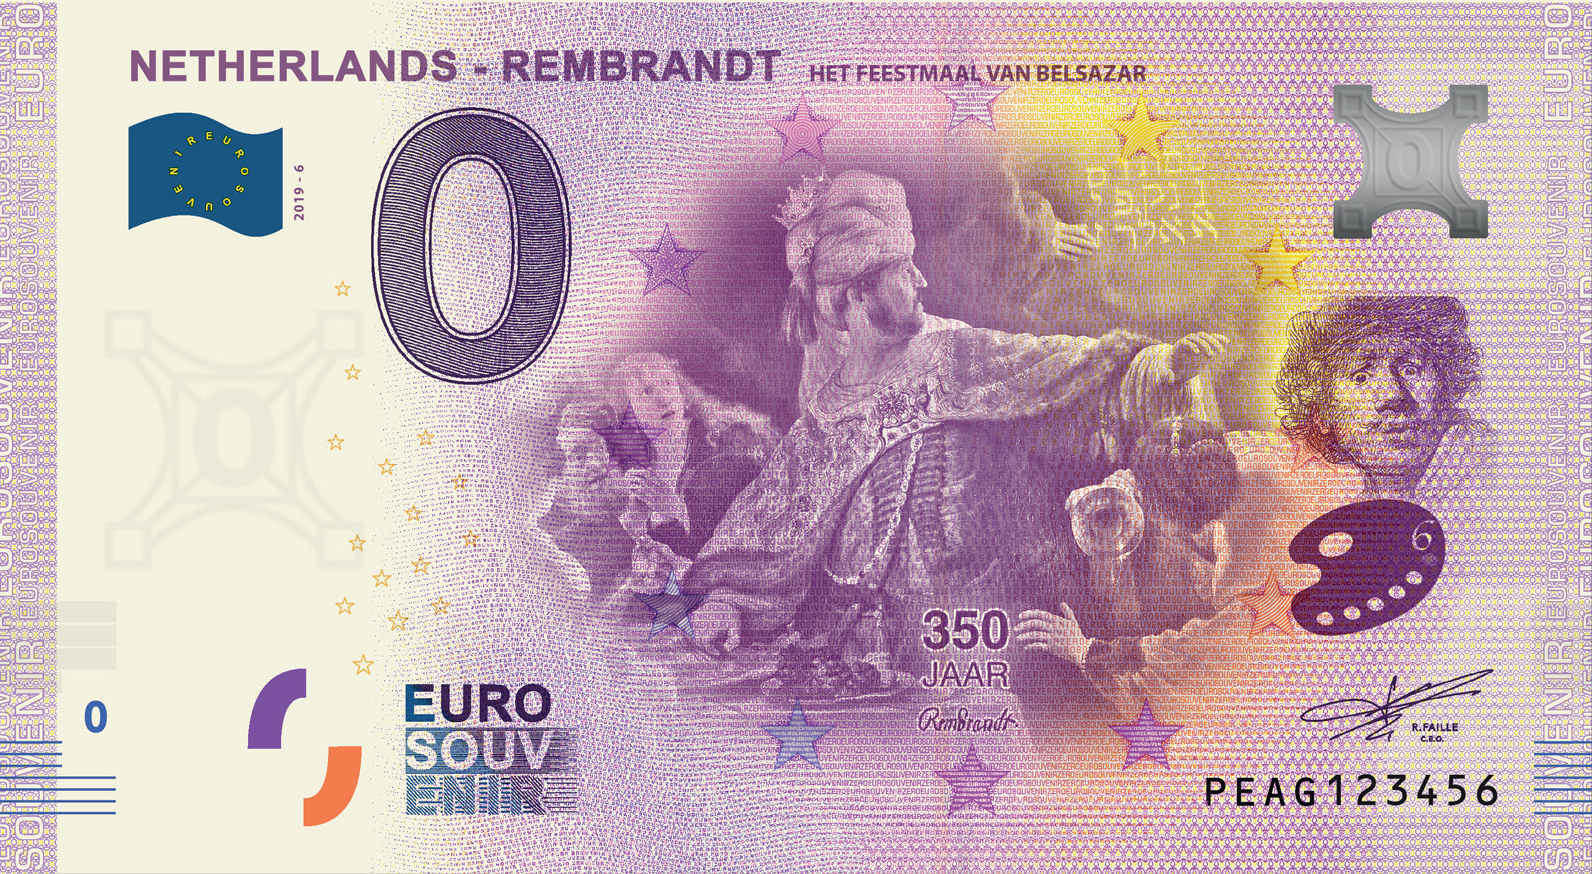 0 Euro souvenir note Nederland 2019 - Rembrandt Feestmaal van Belsazar